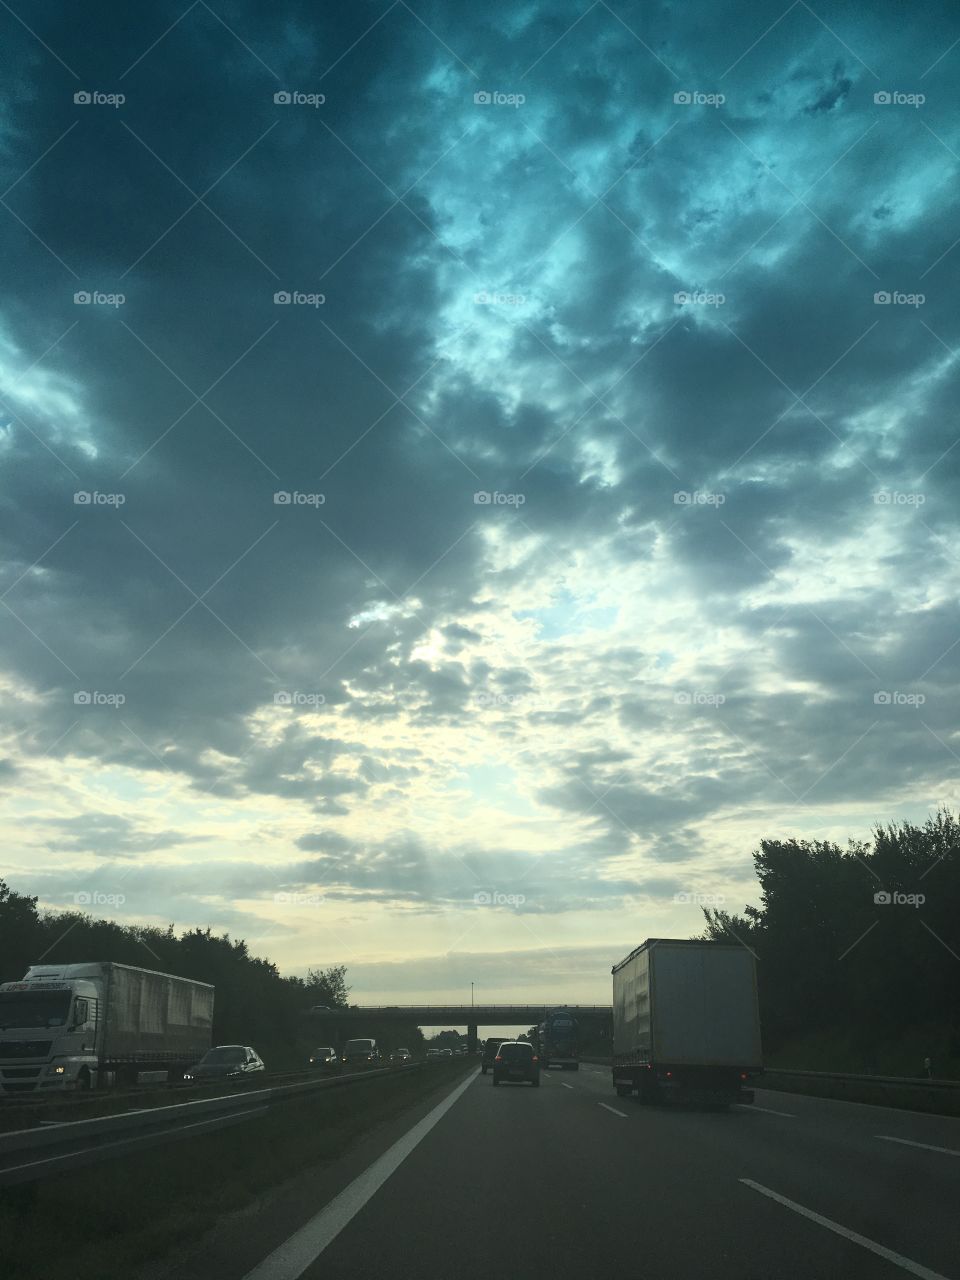 Highway to sunset 